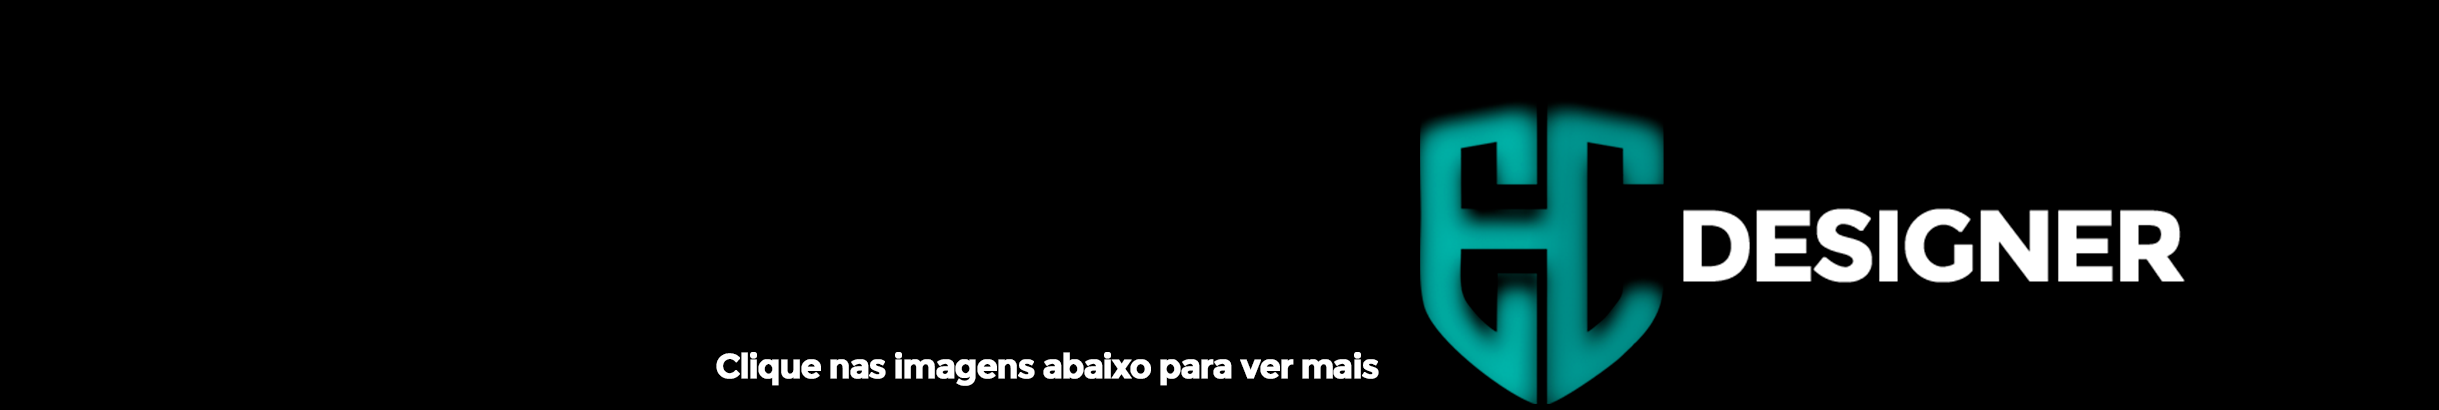 Eduardo Coutinho's profile banner